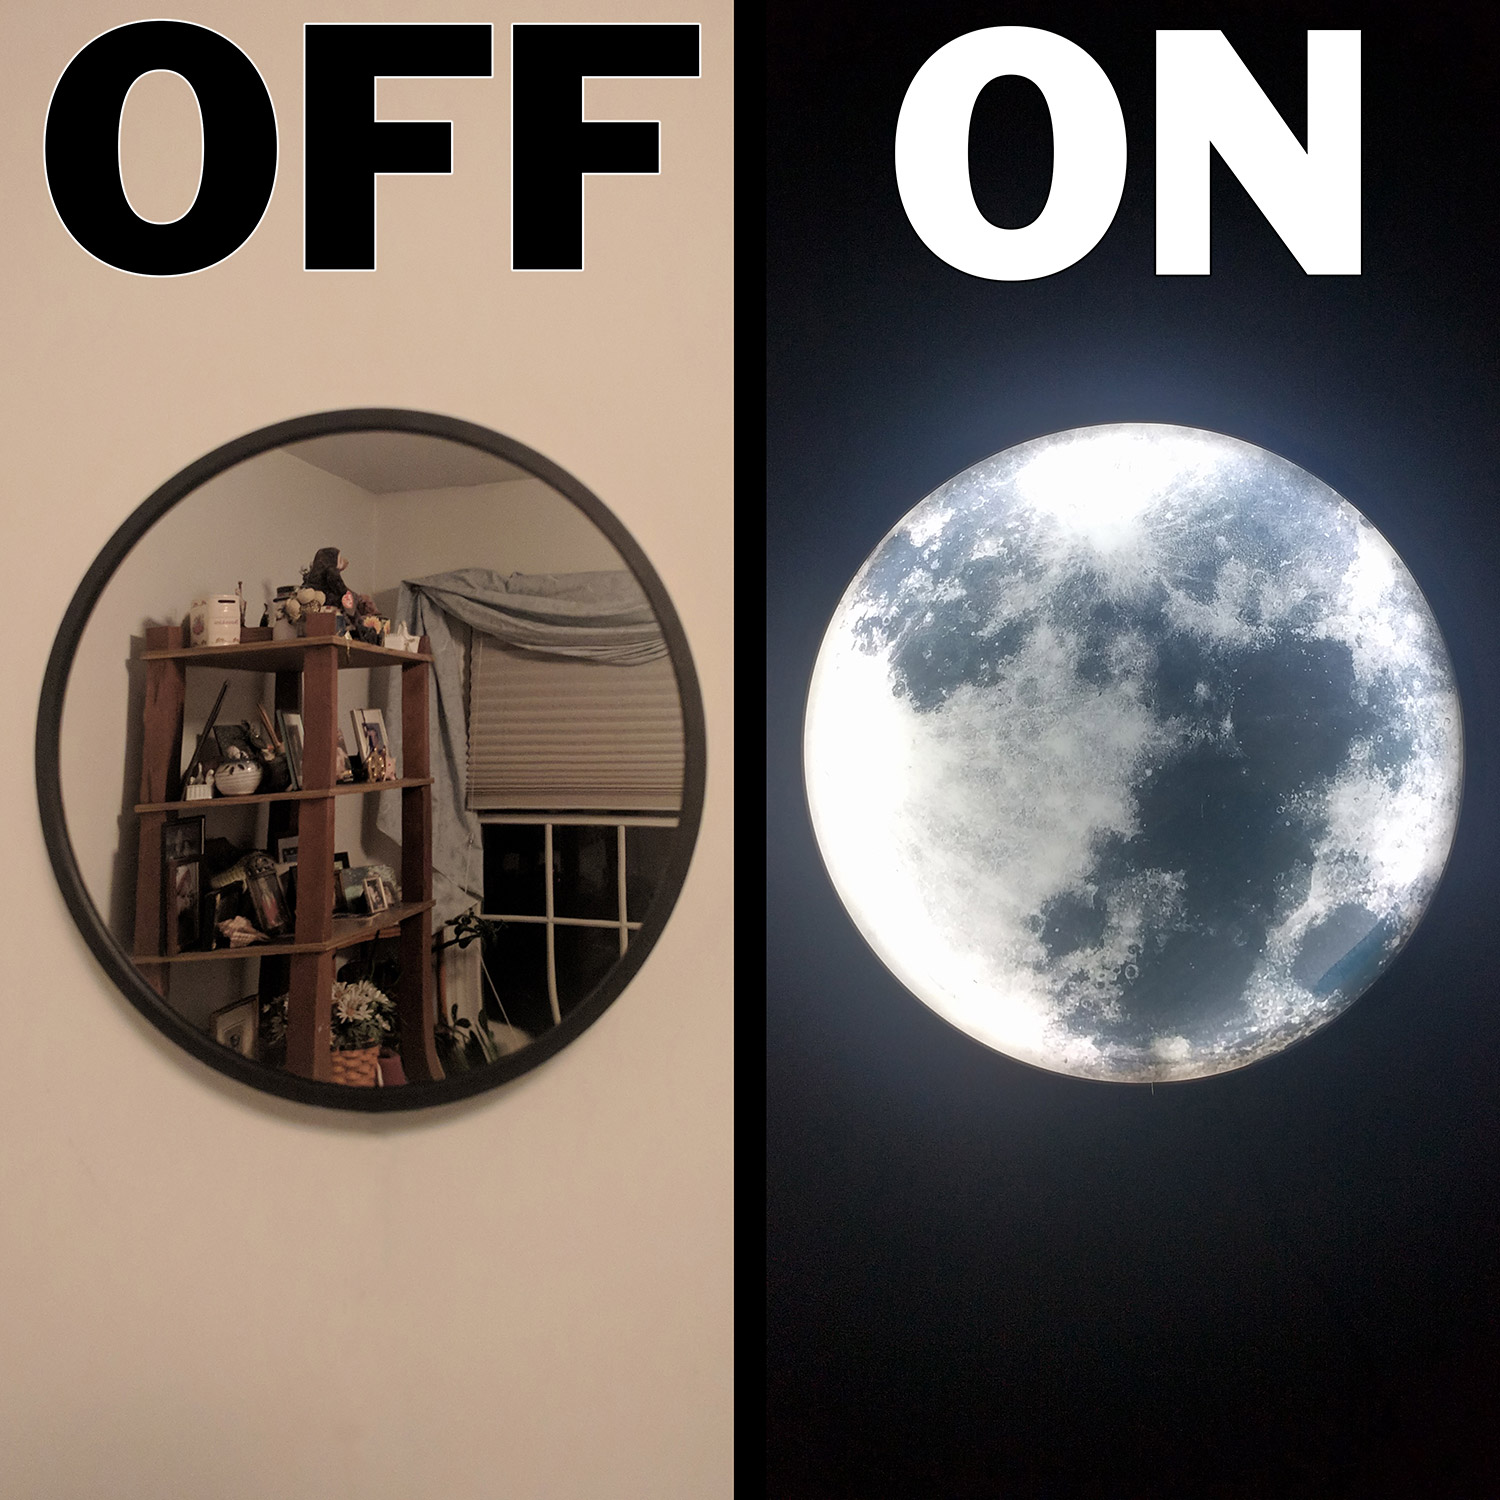 Moon Mirror - Mirror by day, Illuminated moon night-light by night